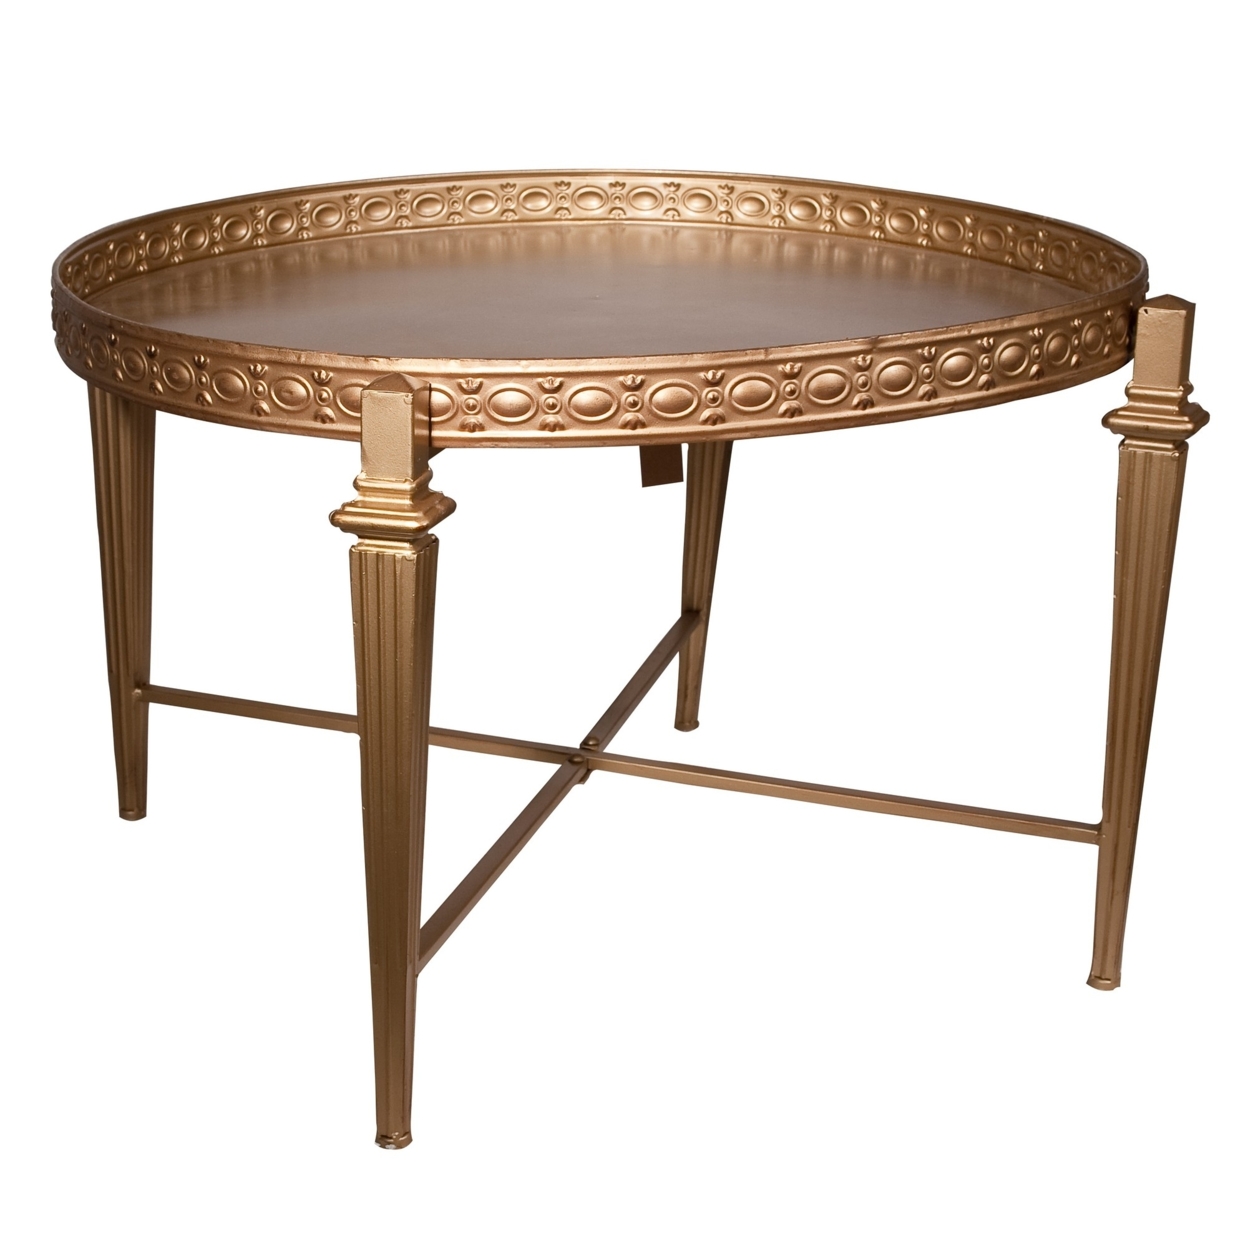 32 Inch Metal Cocktail Table, Circular Pattern Edged Round Top, Copper- Saltoro Sherpi